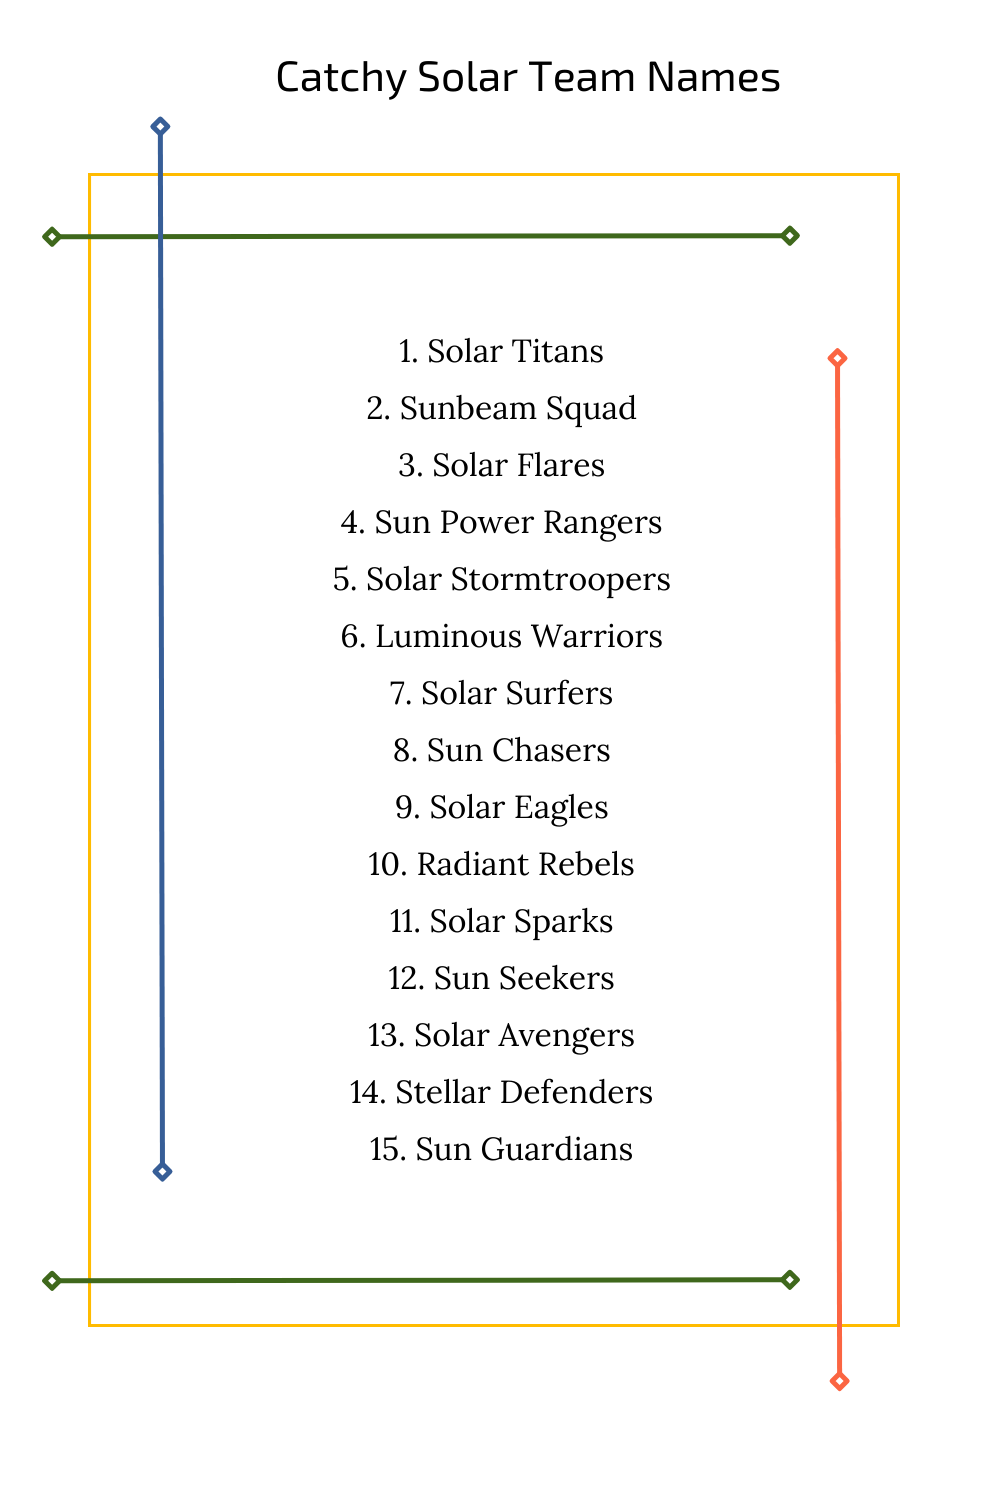 Catchy Solar Team Names